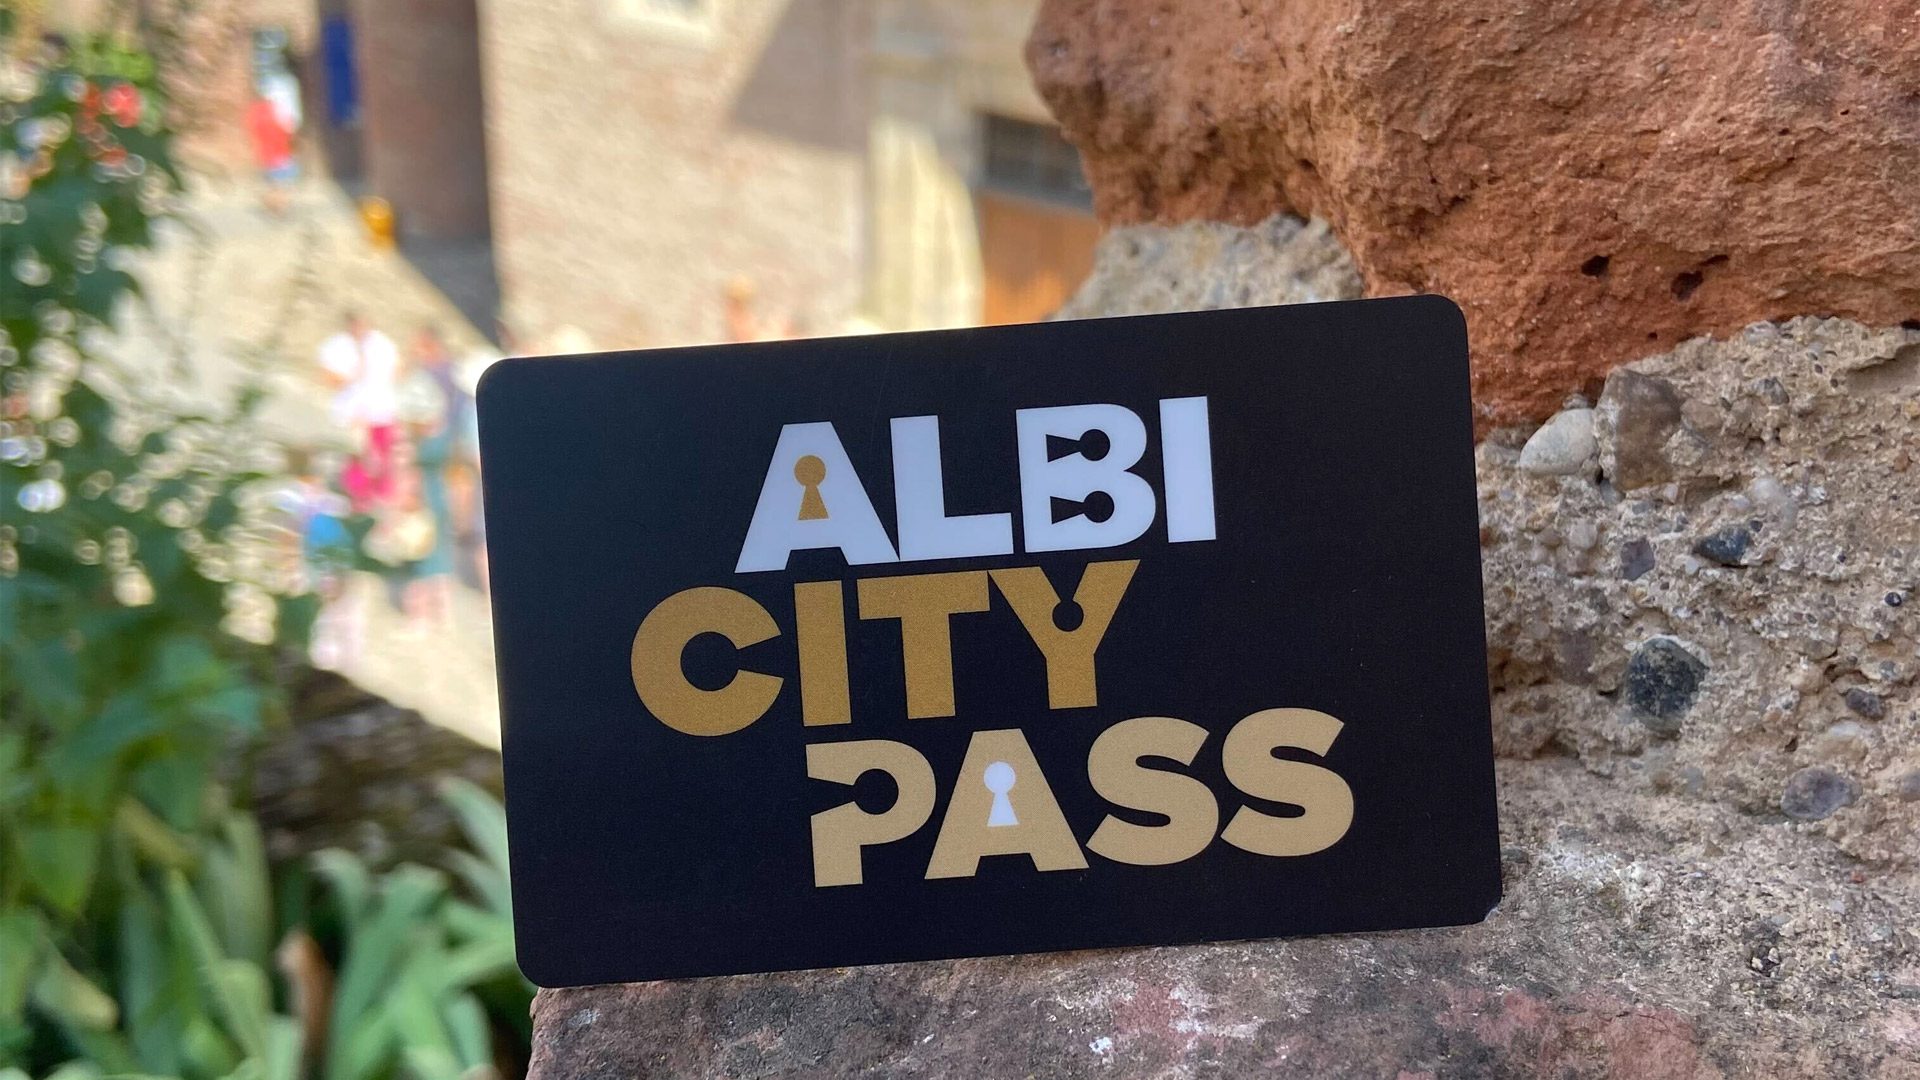 Albi city pass, el pase turístico del destino